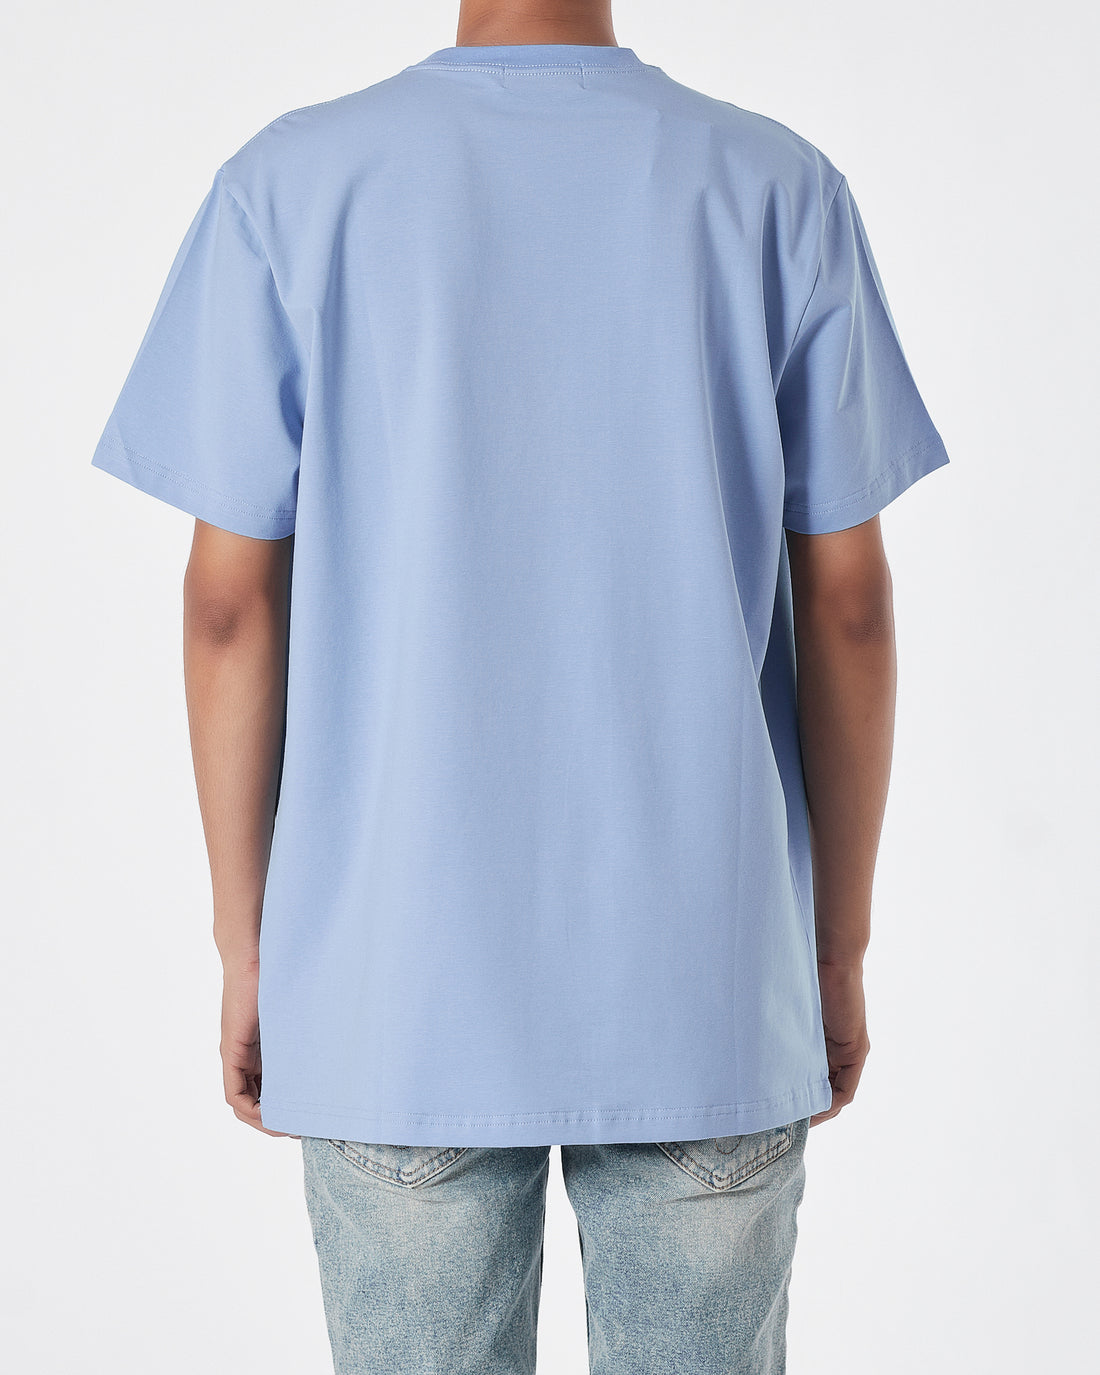 MKI Fox Embroidered Men Light Blue T-Shirt 14.90